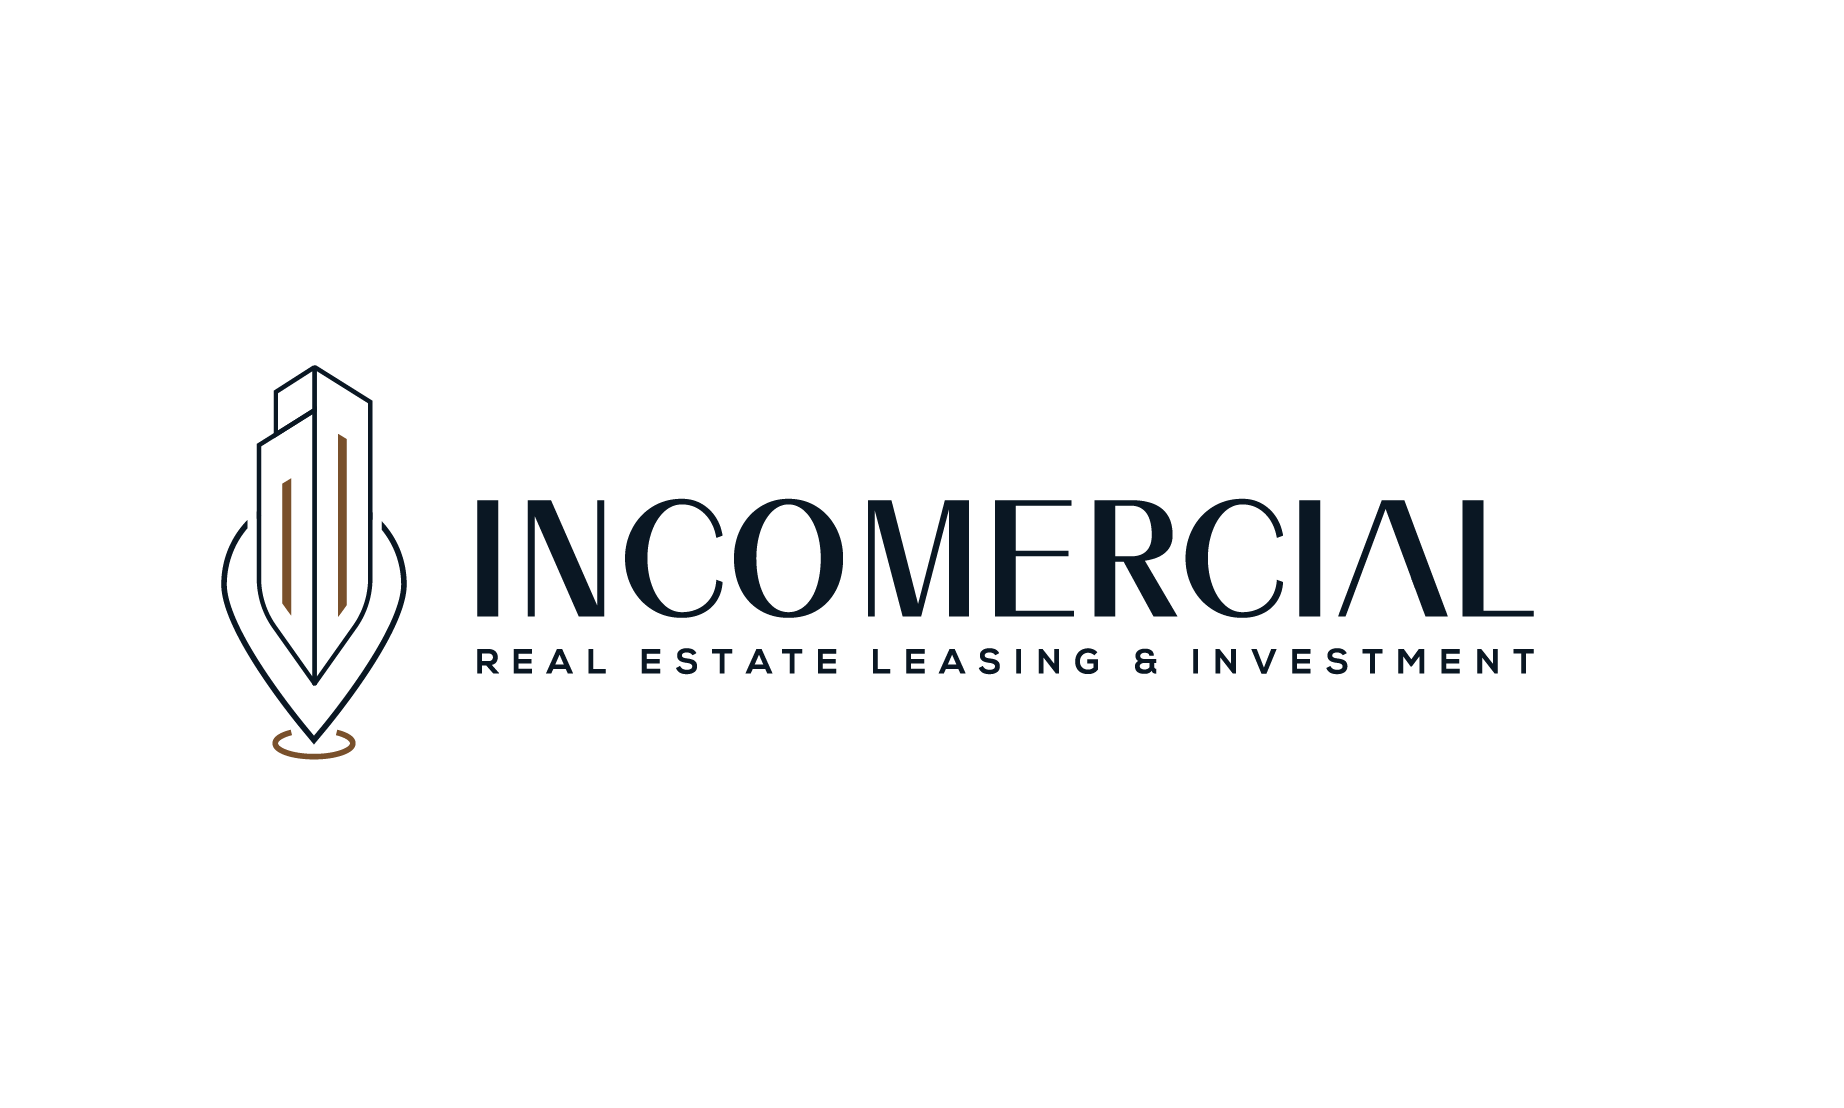 incomercial final logo-03